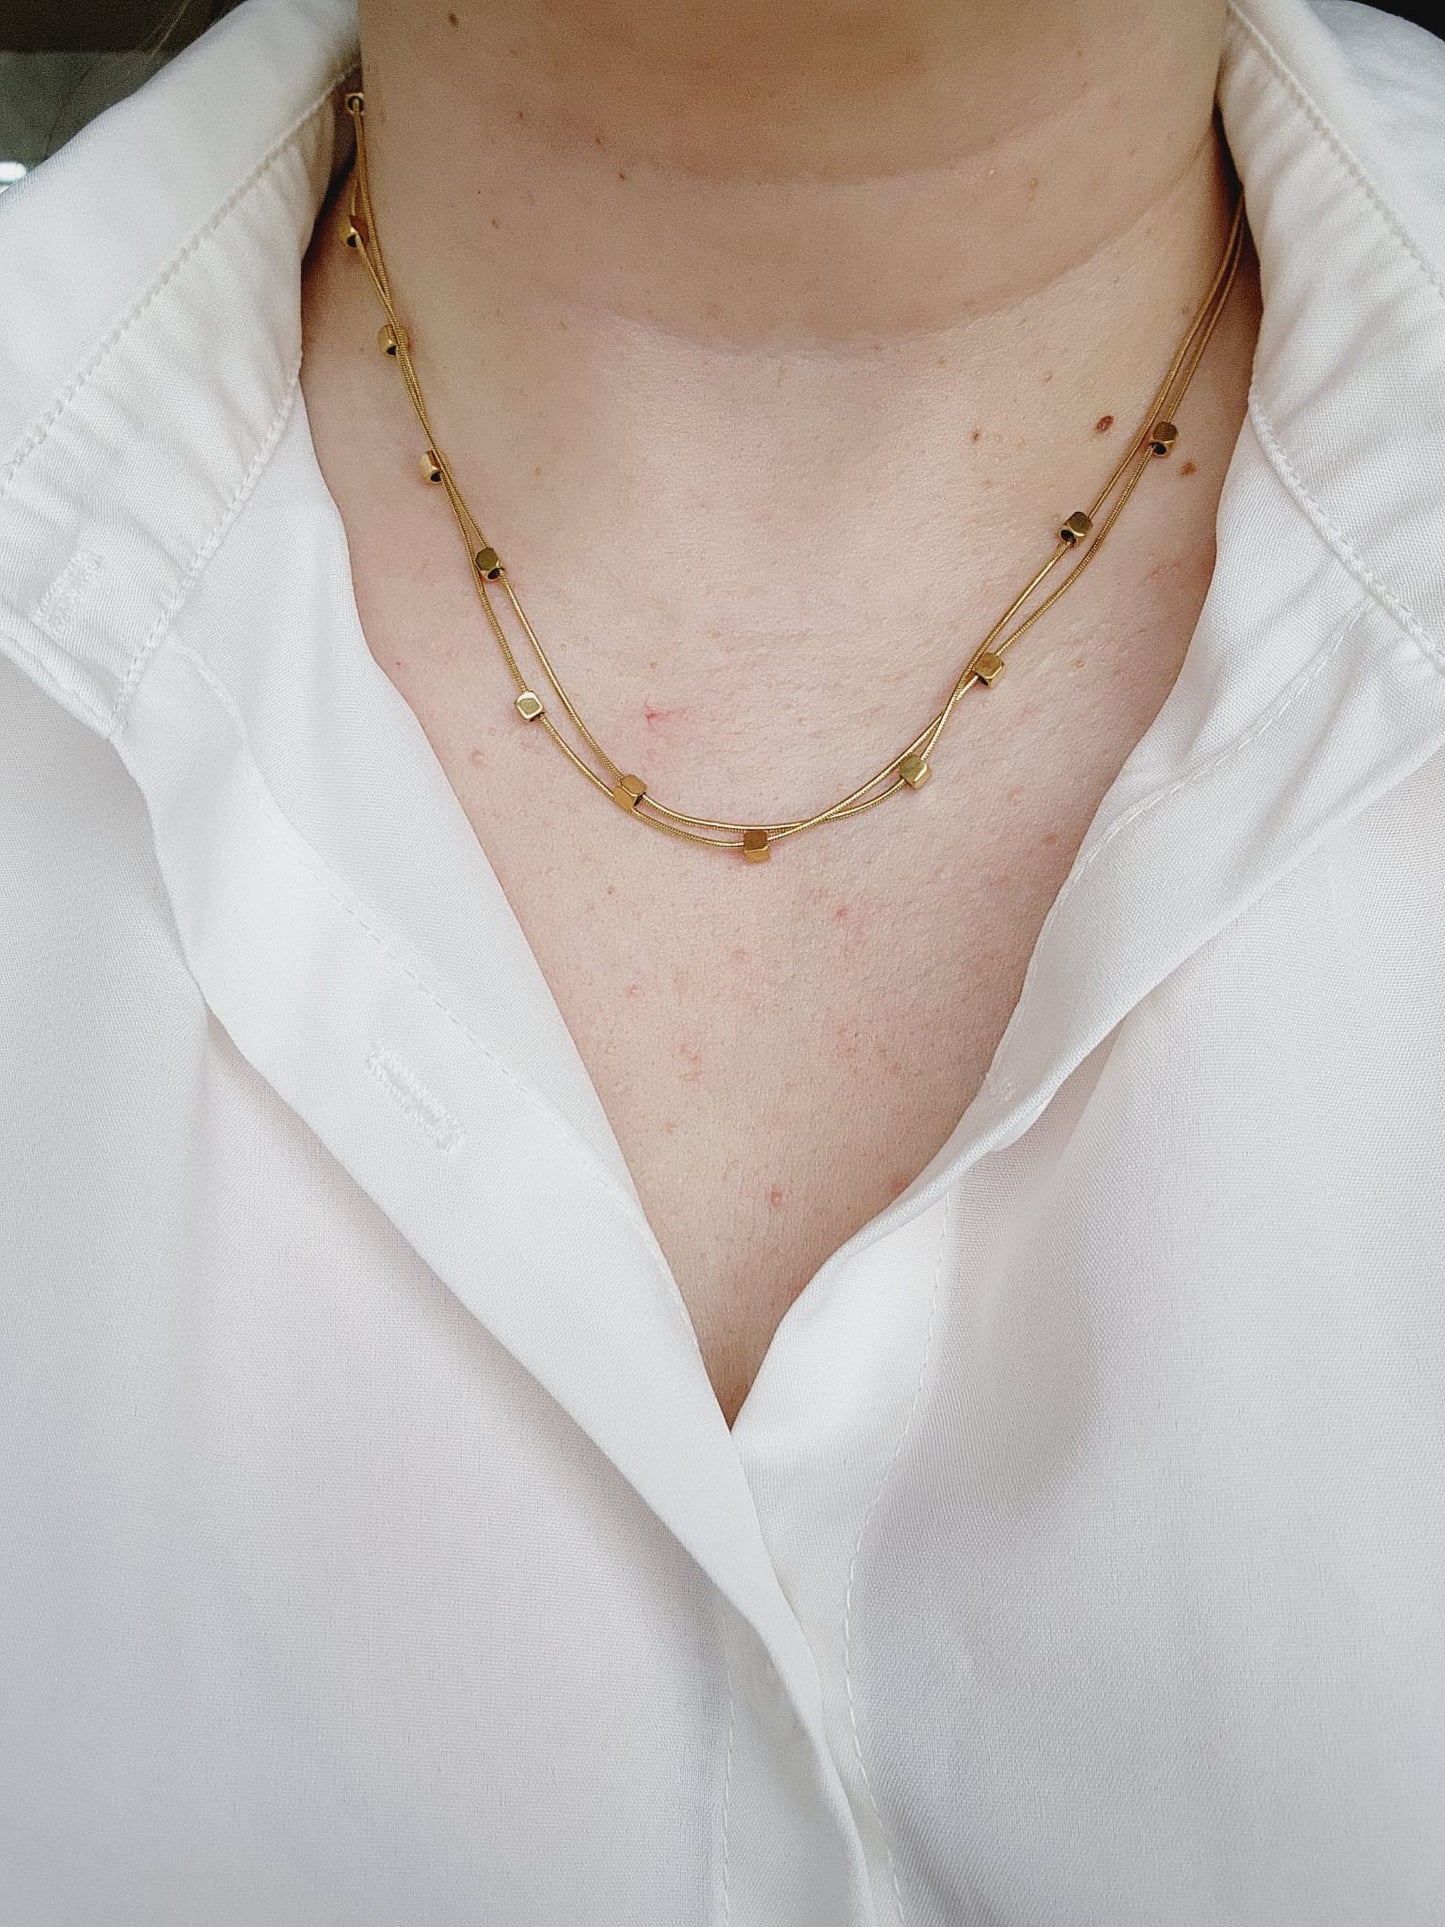 square necklace, simple classy necklace, gift for her, gift for friend, Wife Necklace cadenas de Enchape en oro, joyeria de enchape en oro, minimalist necklace, minimalist multilayer